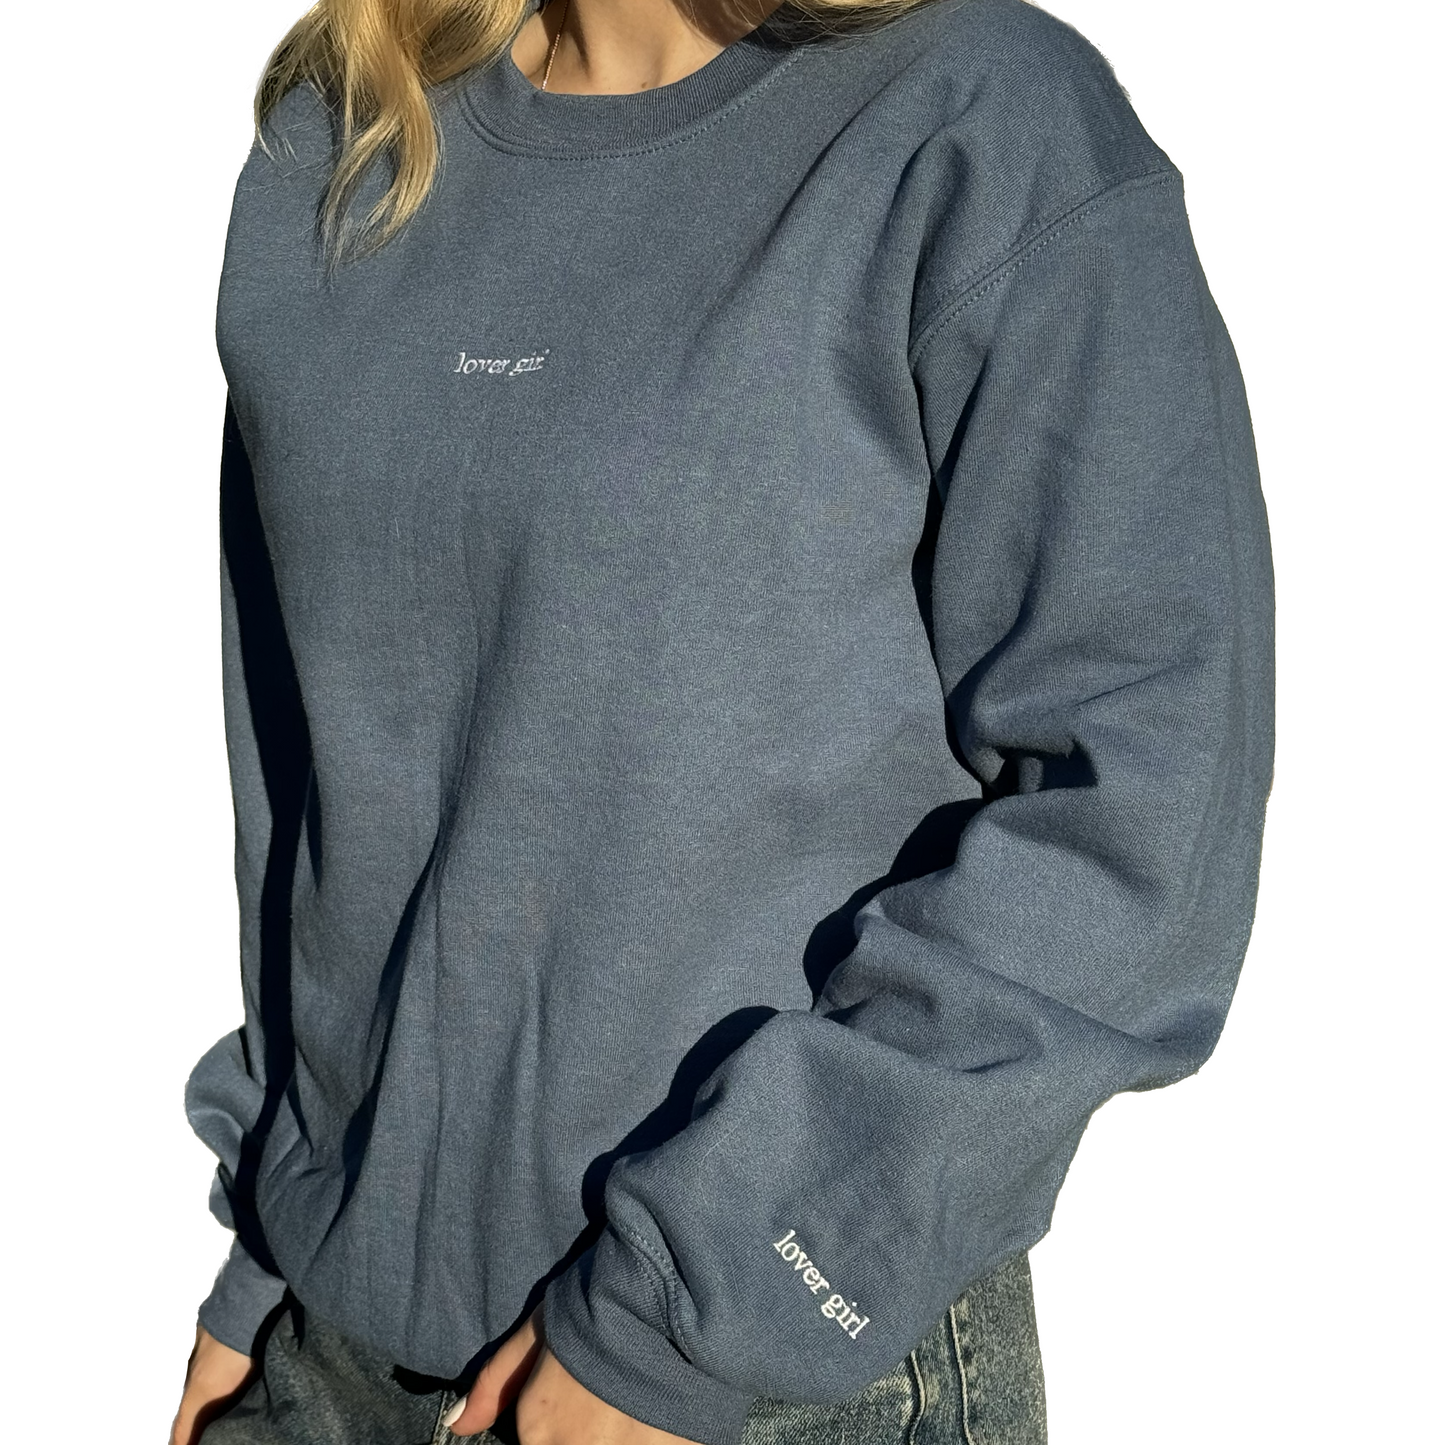 Simple Lover Girl Crewneck Sweatshirt